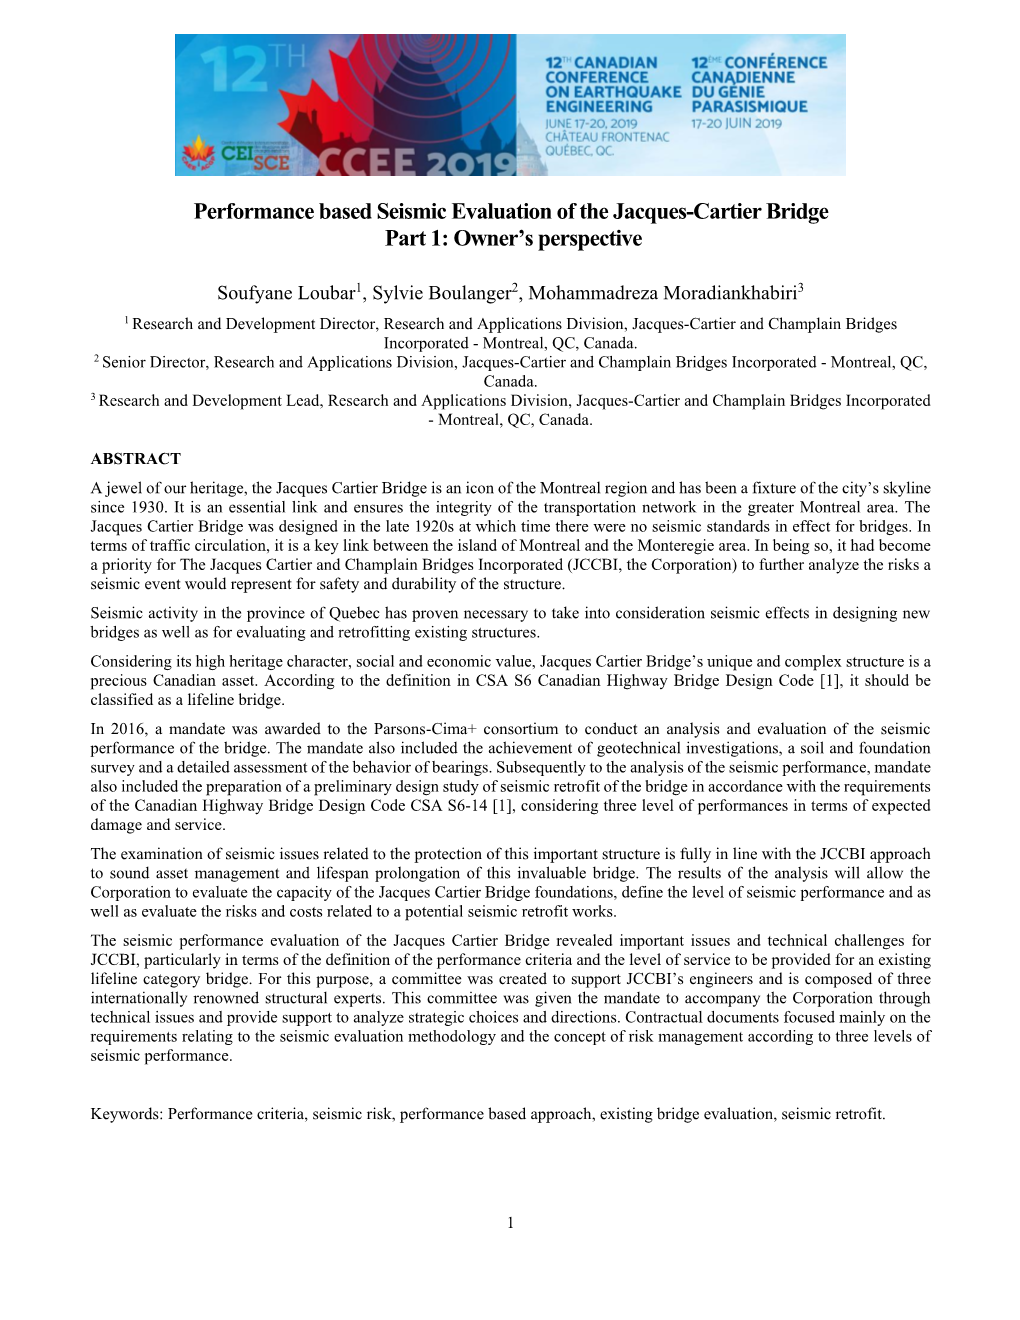 Seismic Evaluation of the Jacques-Cartier Bridge Part 1: Owner’S Perspective